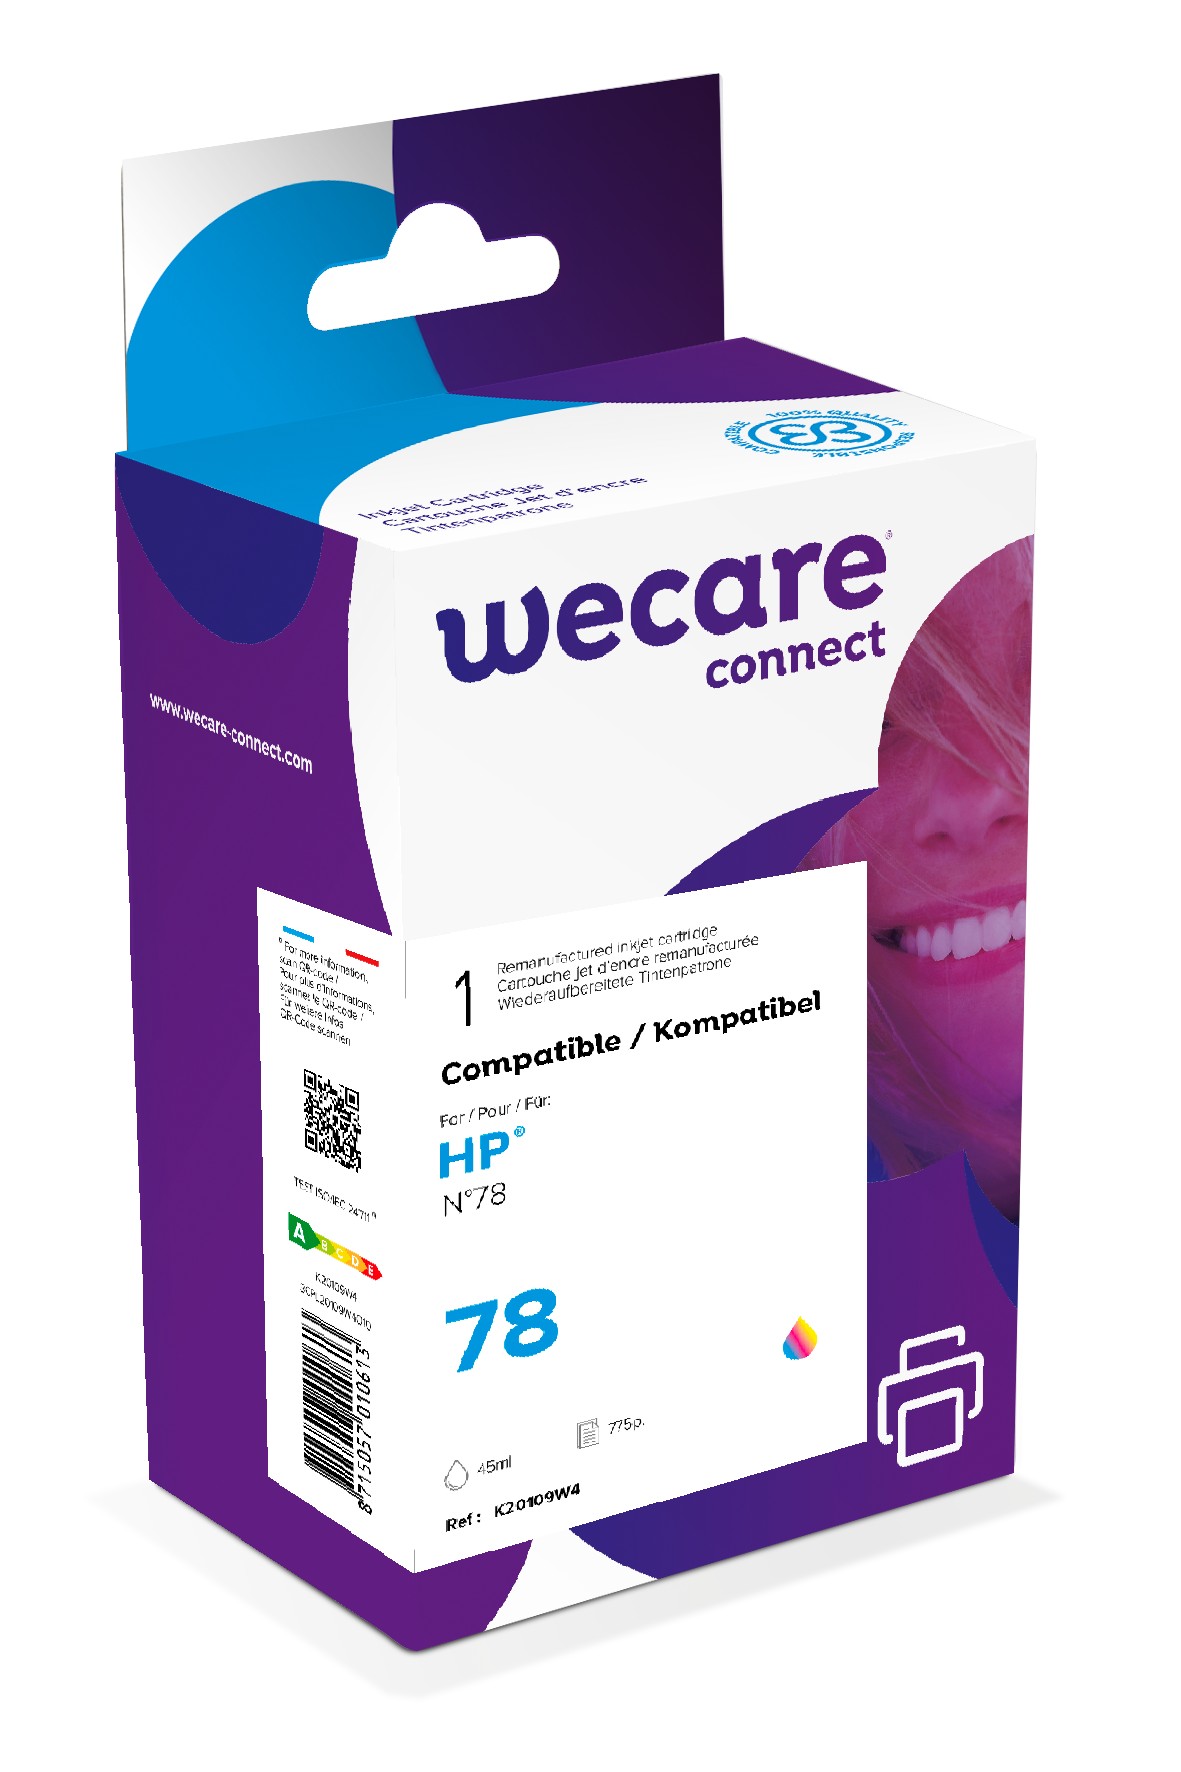 WECARE HP C6578A - kompatibilní WECARE ARMOR cartridge pro HP DJ 920c, 930c, 932c, 934c, 935c, 940c/cvr, 1115/cvr (C6578AE), 3 colors, 45ml, 775str